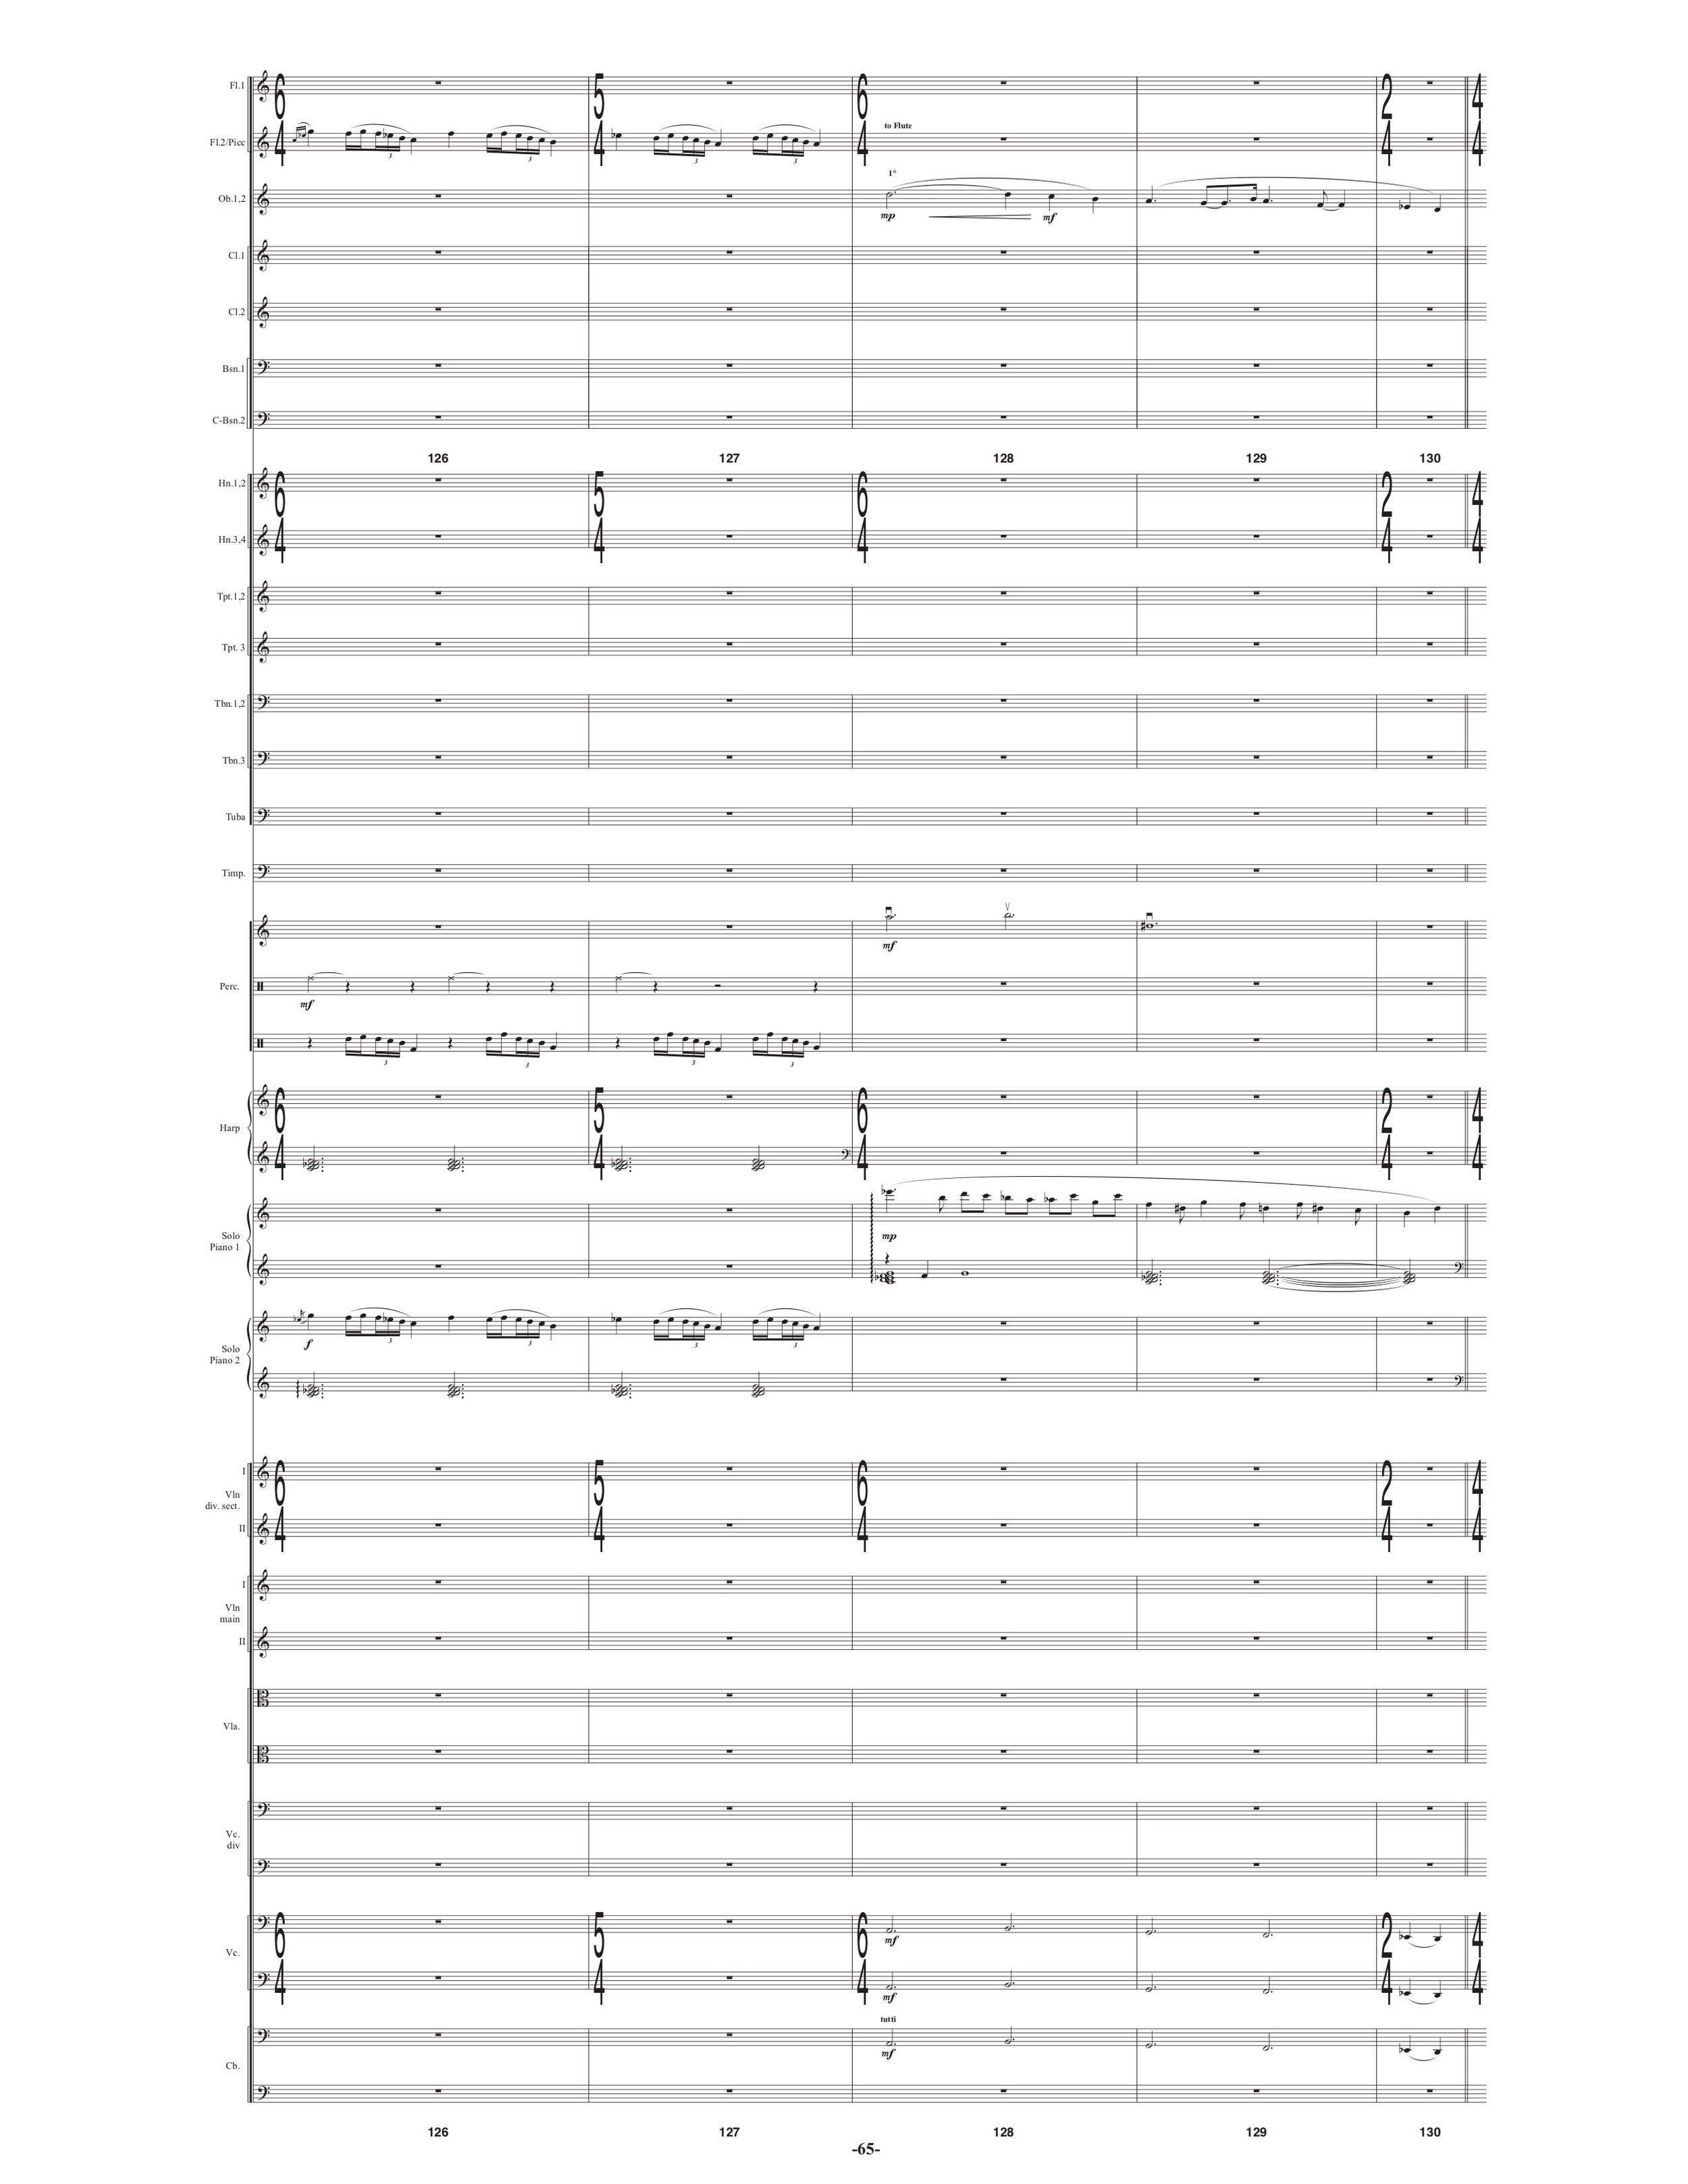 Symphony_Orch & 2 Pianos p70.jpg